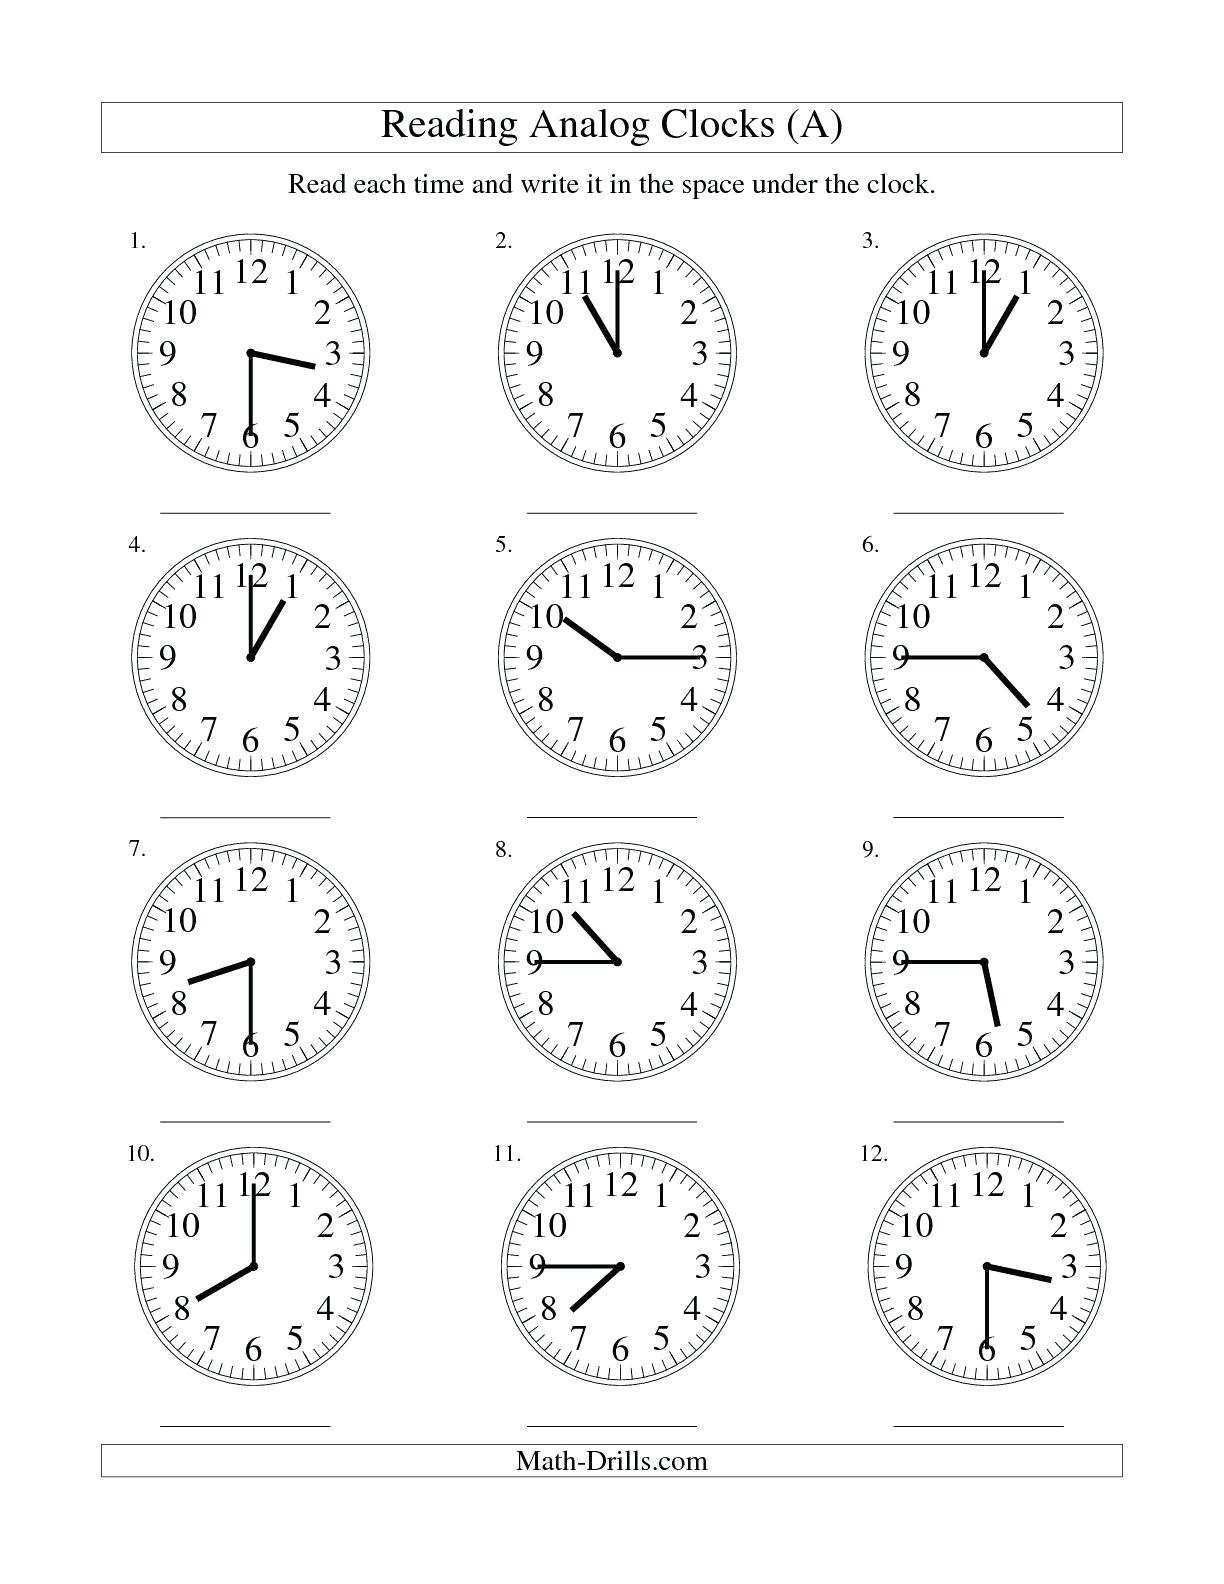 digital-clock-worksheets-db-excel